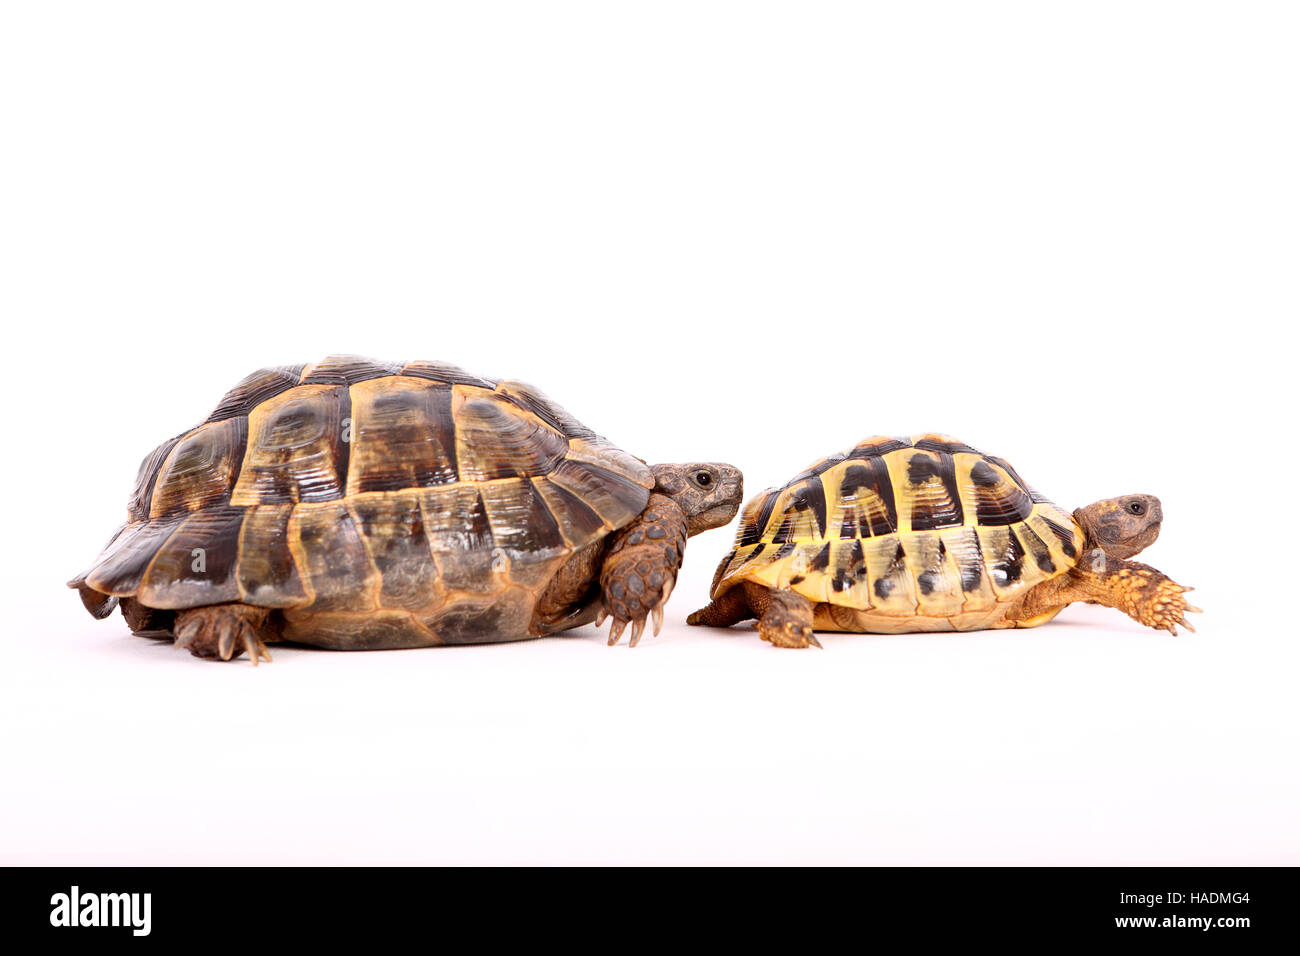 Hermanns tartaruga (Testudo hermanni) e Mediterraneo sperone-thighed tartaruga, tartaruga greca (Testudo graeca) visto dal lato. Studio Immagine contro uno sfondo bianco. Germania Foto Stock